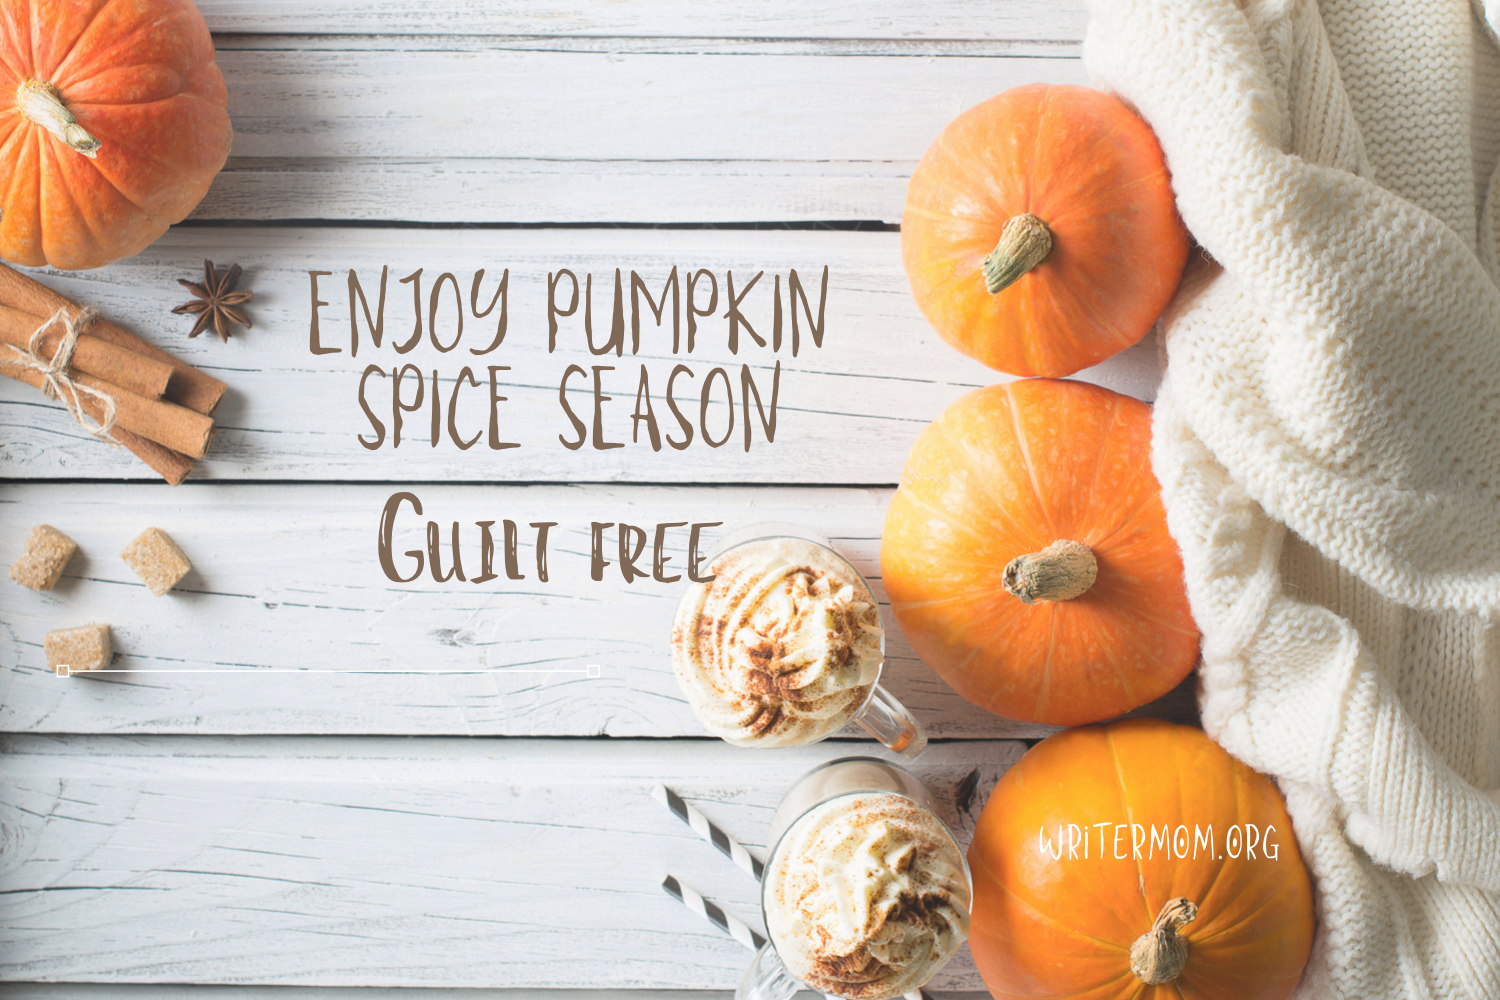 Enjoy Pumpkin Spice Season Guilt Free